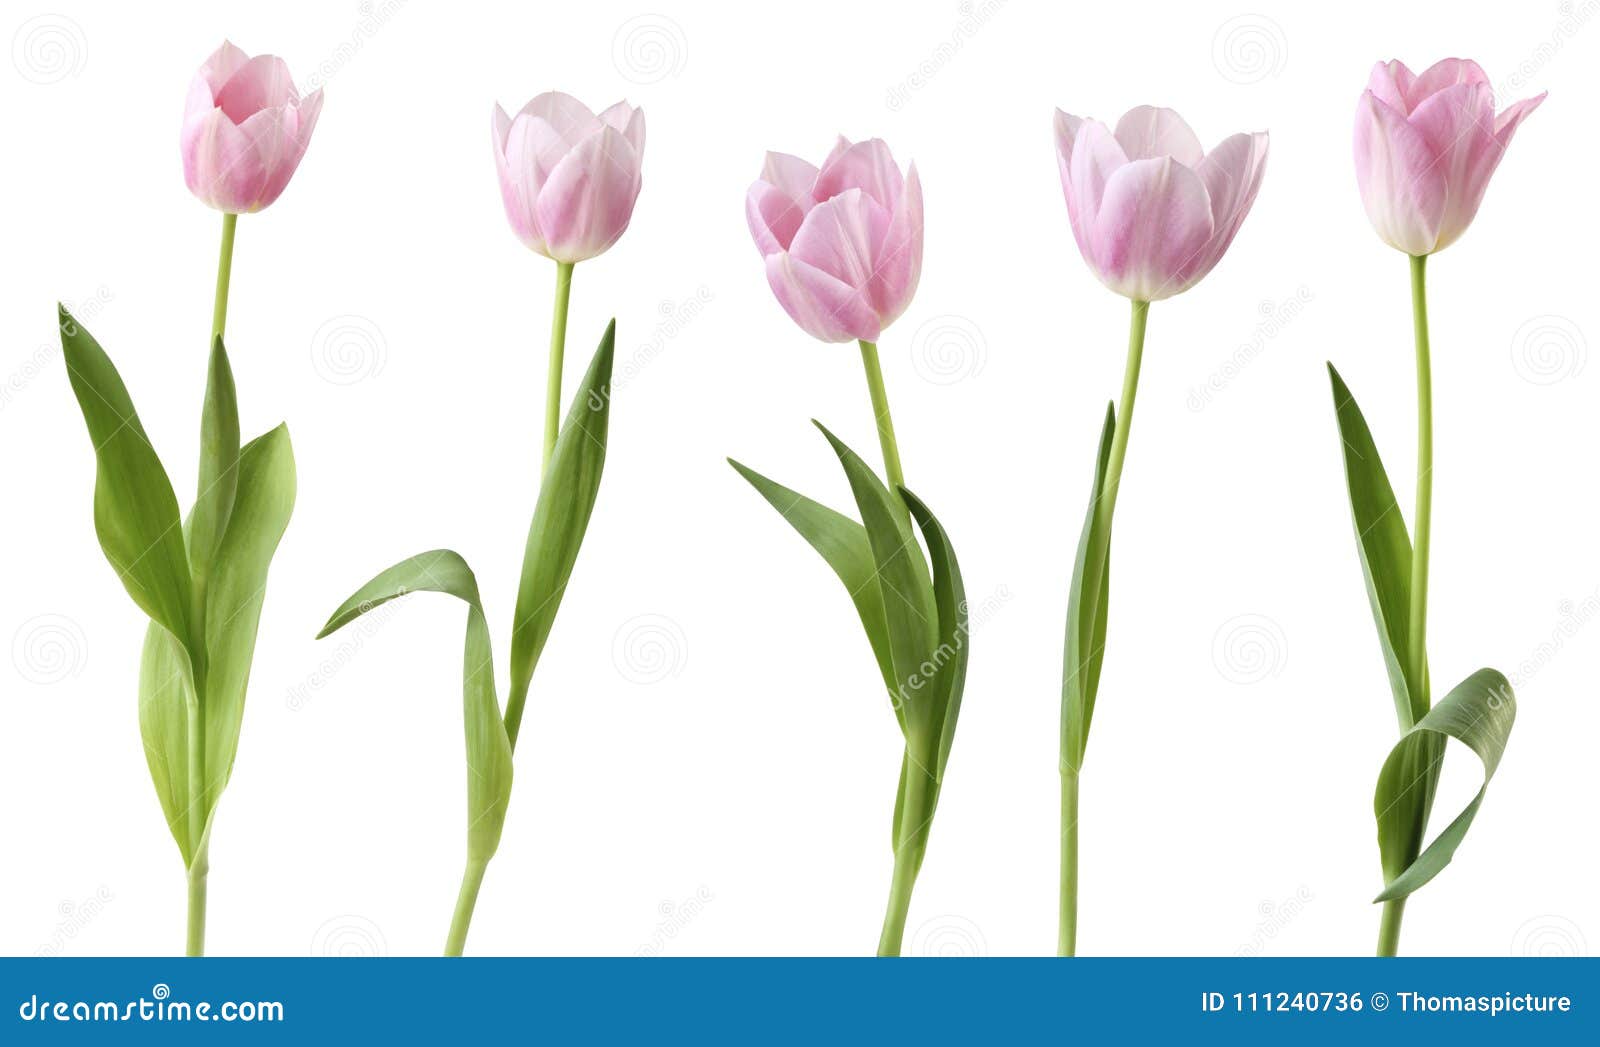 tulips liliengewÃÂ¤chse, liliaceae  on white background